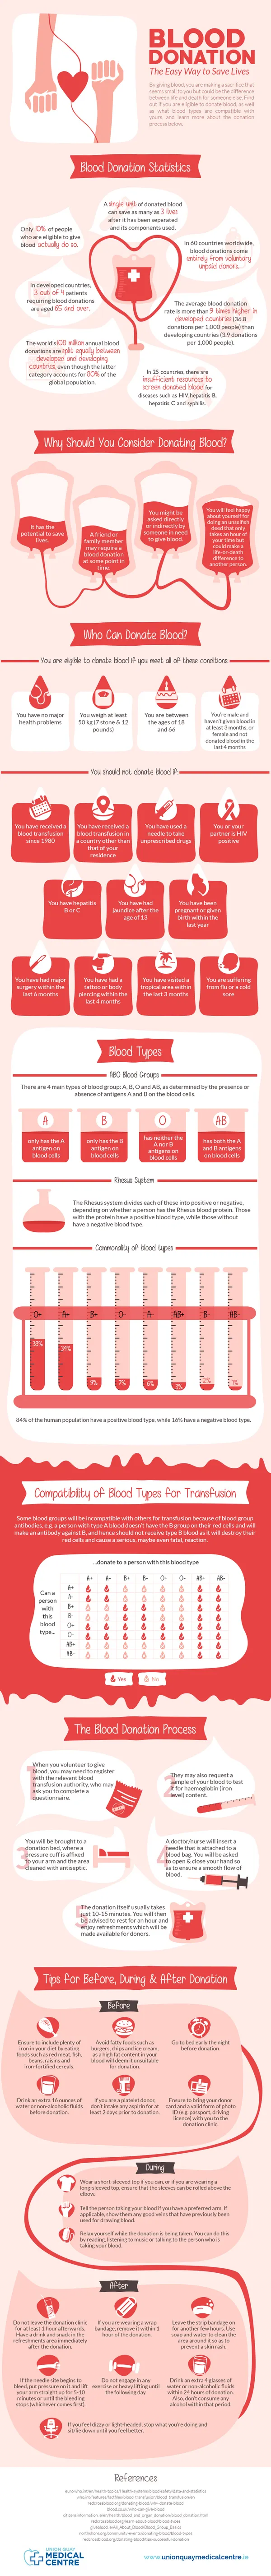 Union Quay - Blood Donation infographic